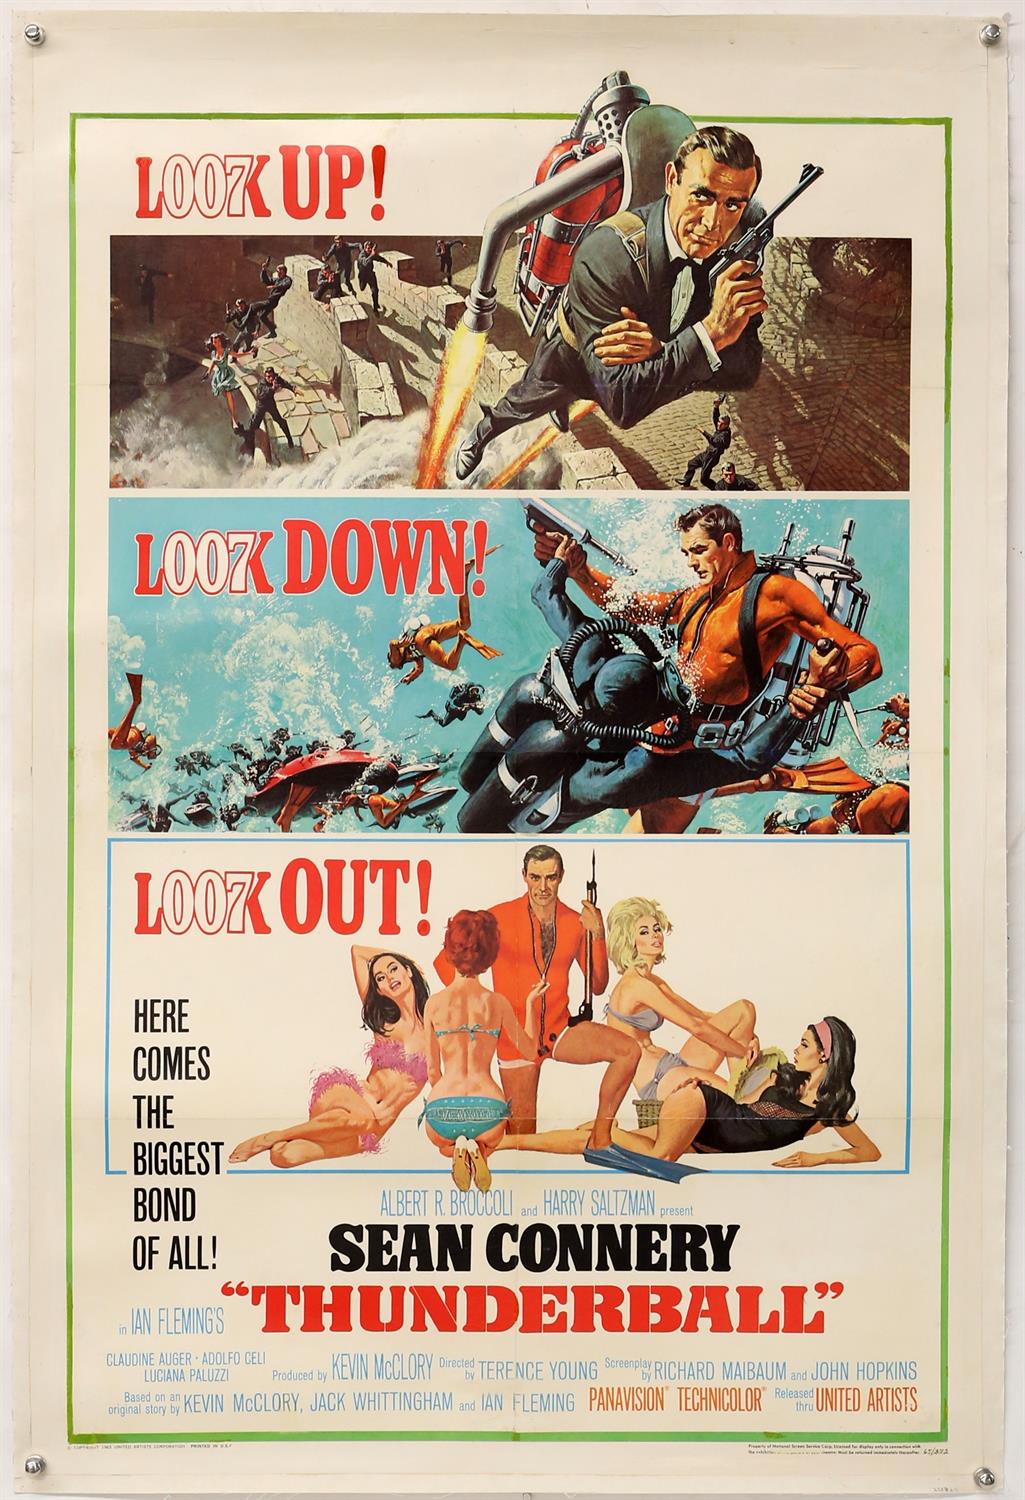 James Bond Thunderball (1965) US One sheet film poster, starring Sean Connery, artwork by Frank